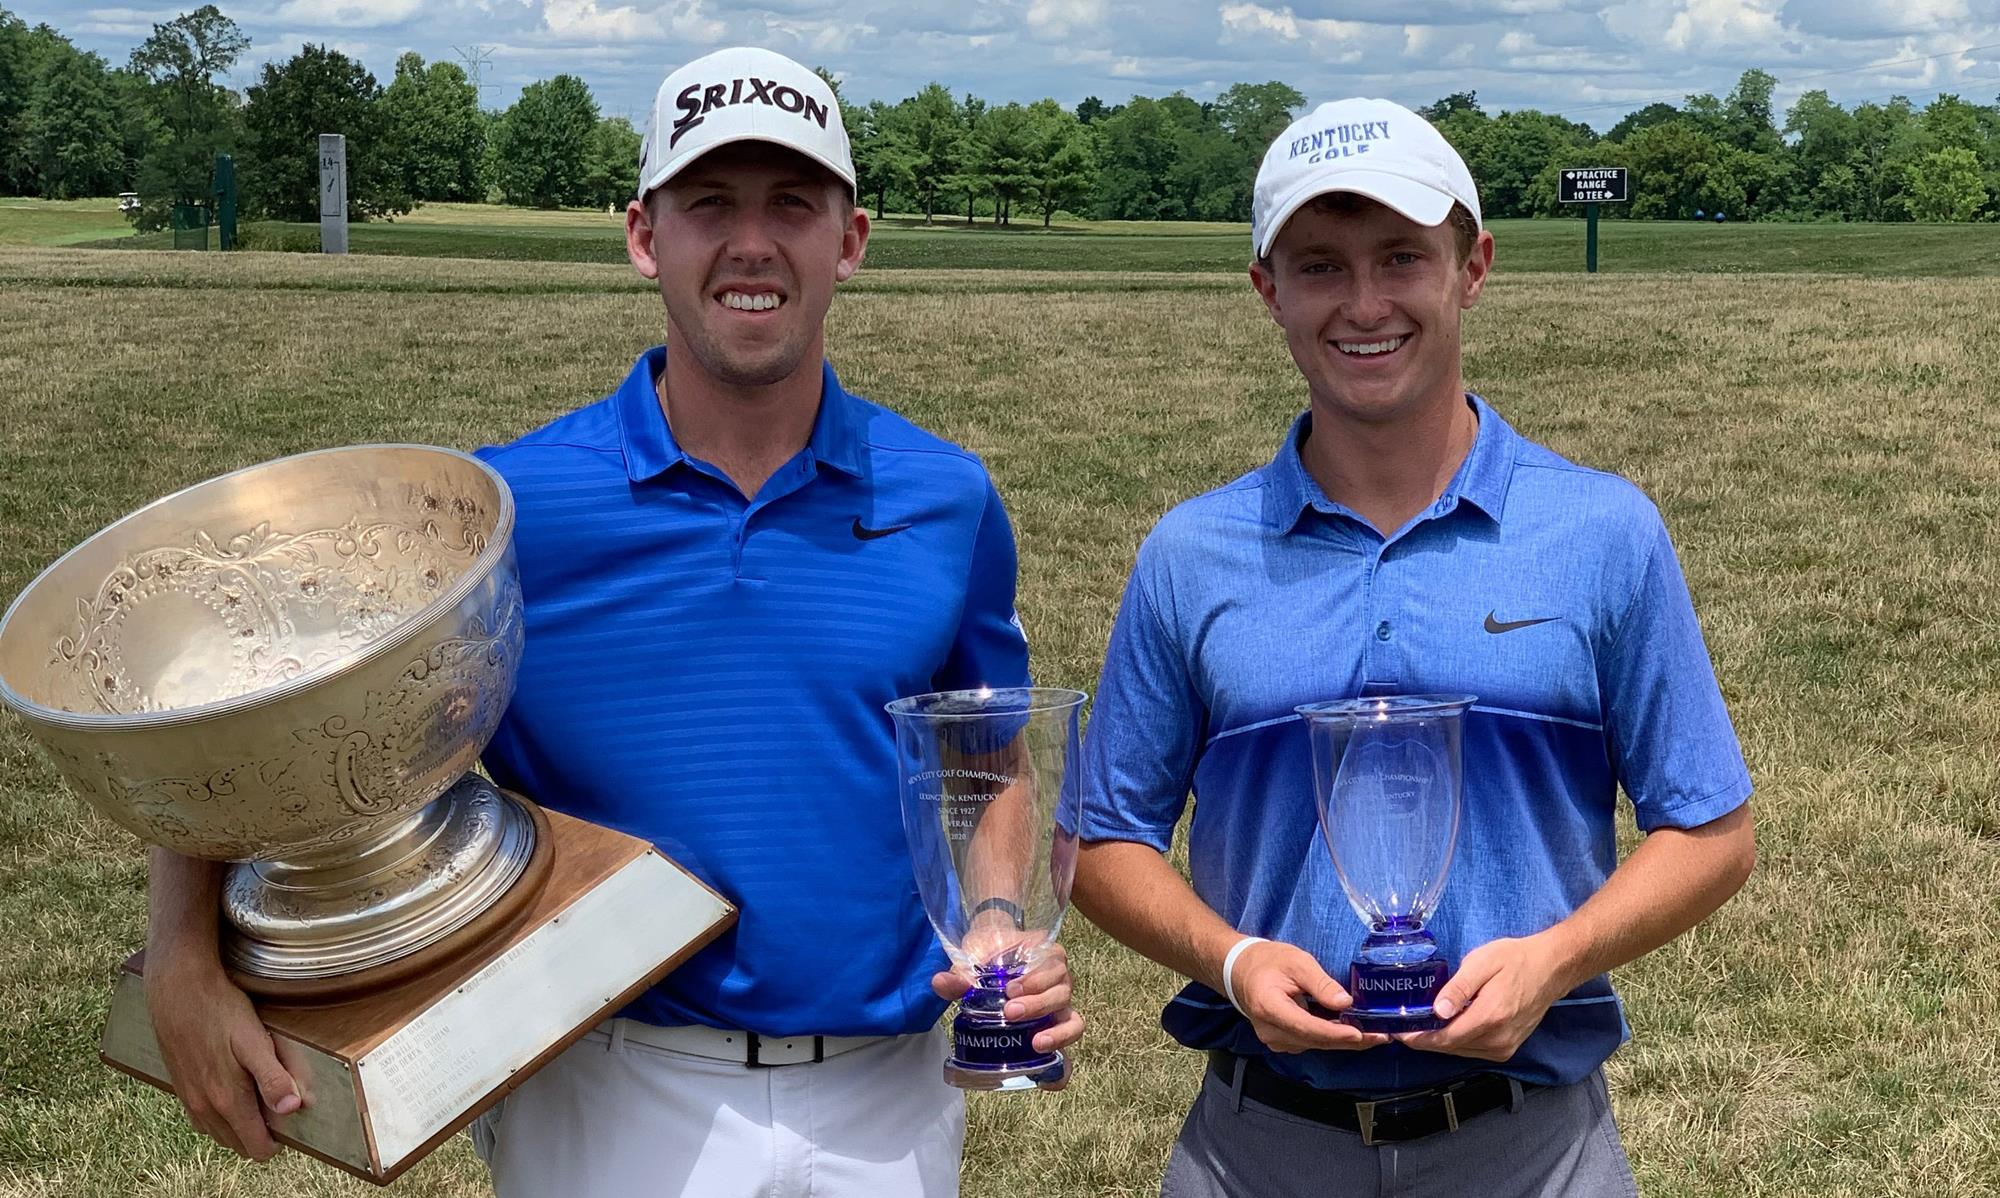 Cook Wins Lexington City Golf Championship; Parks is Runner-Up